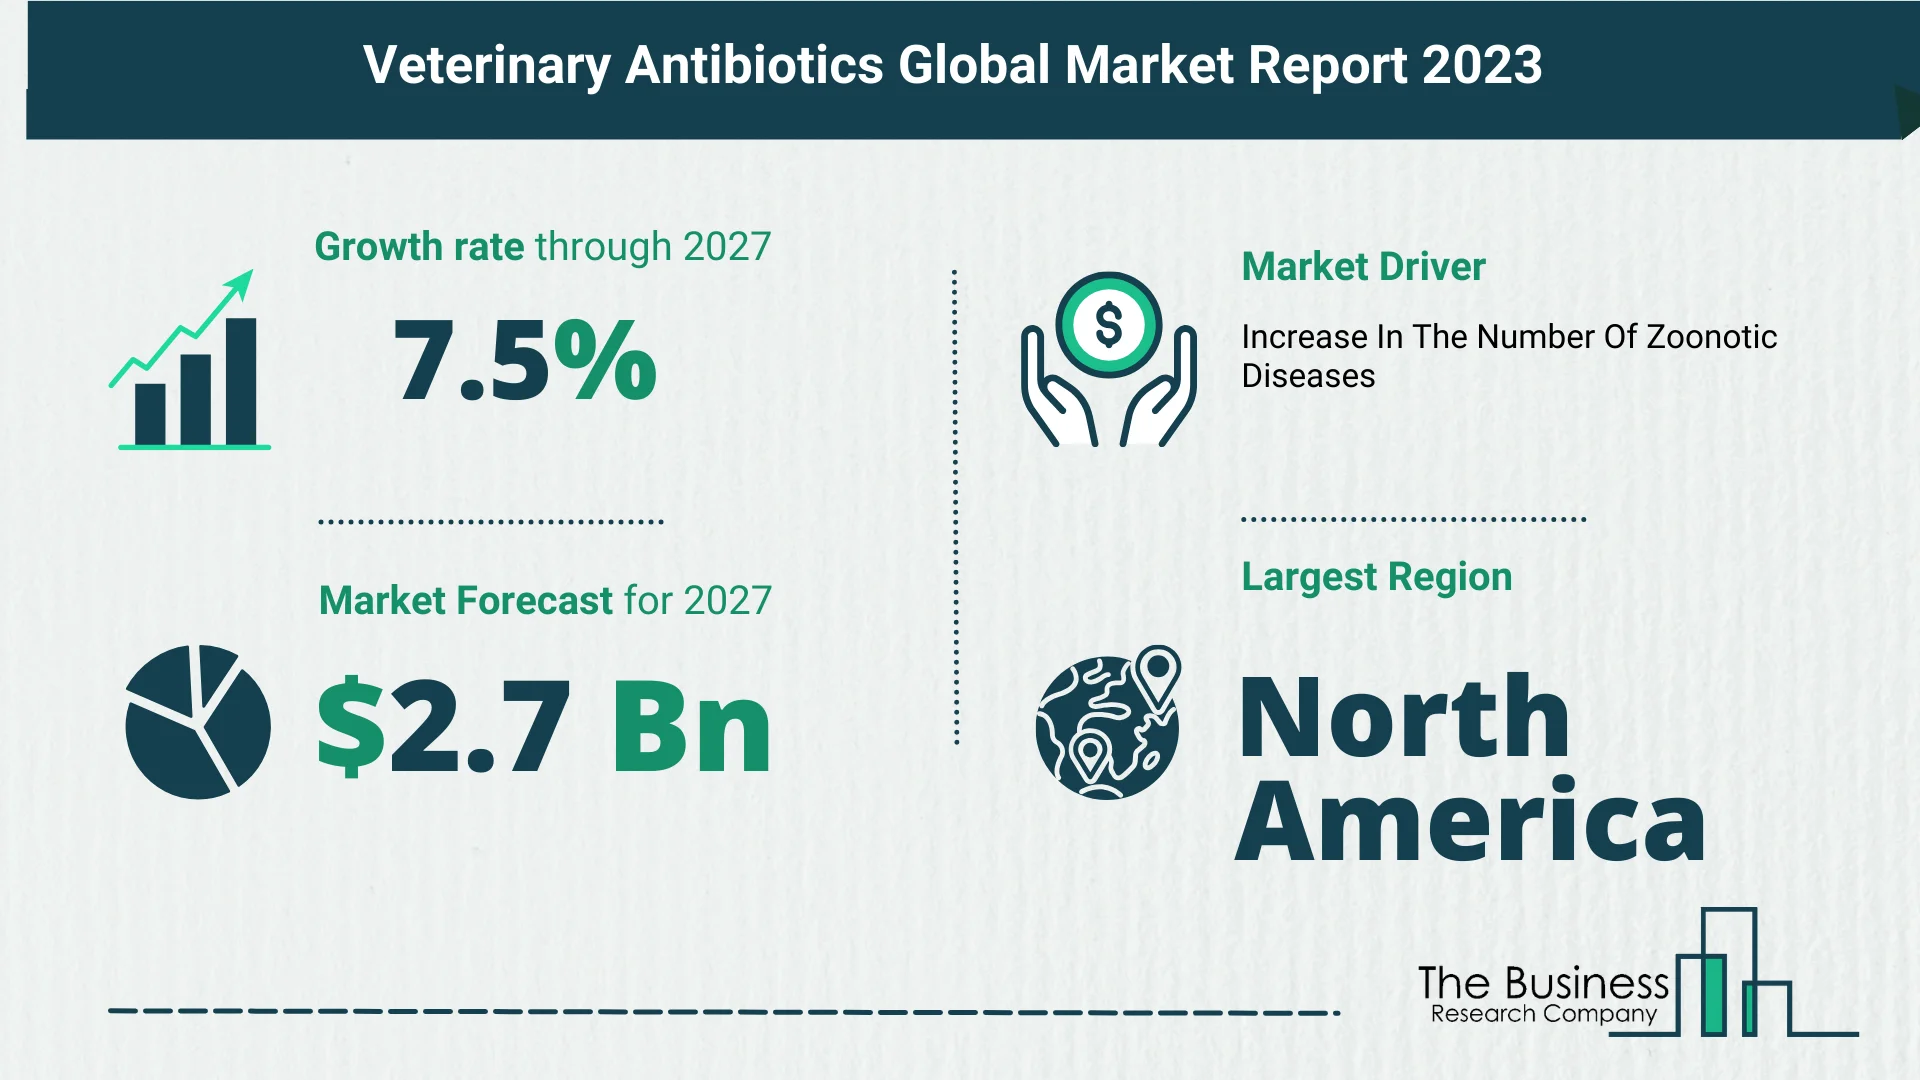 Global Veterinary Antibiotics Market Analysis 2023: Size, Share, And Key Trends